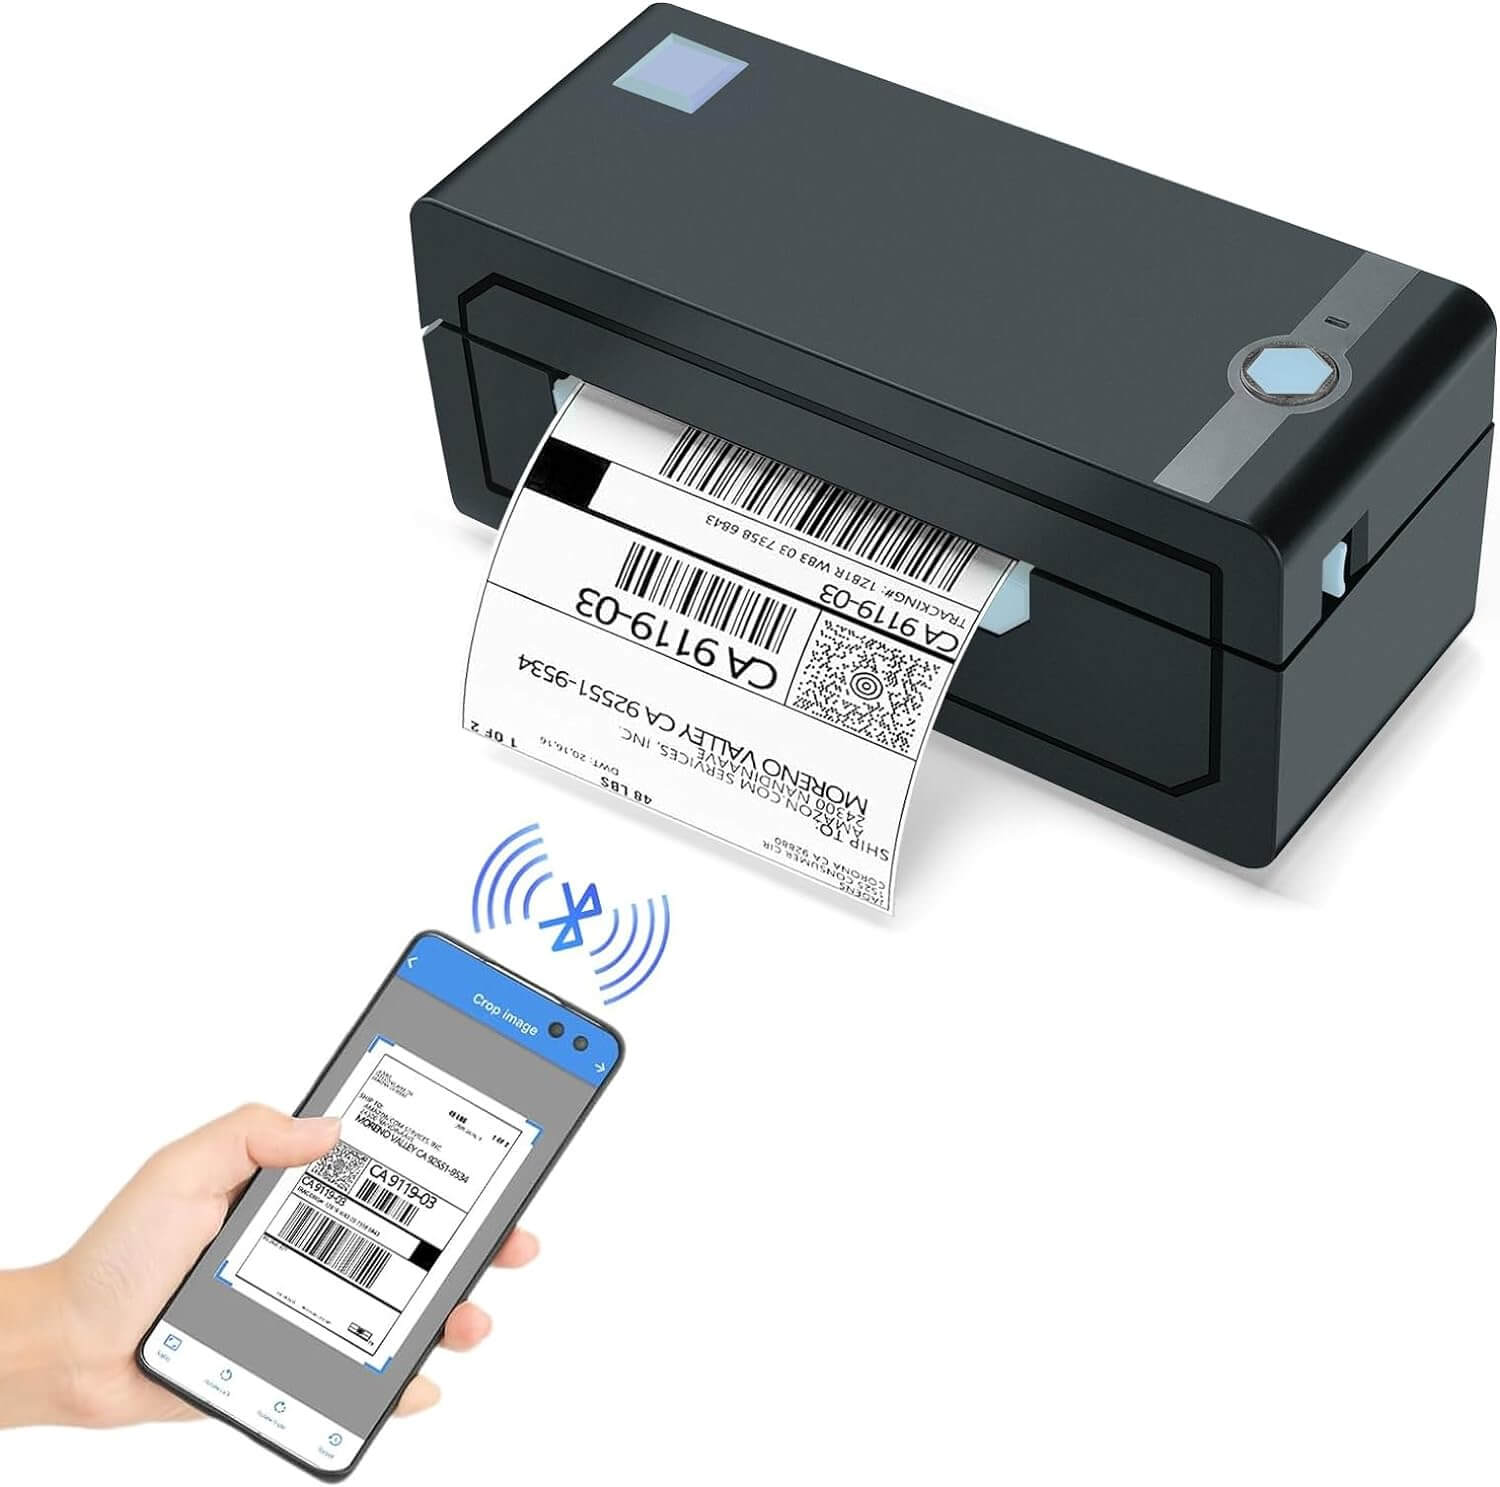 9. JADENS Bluetooth Thermal Shipping Label Printer